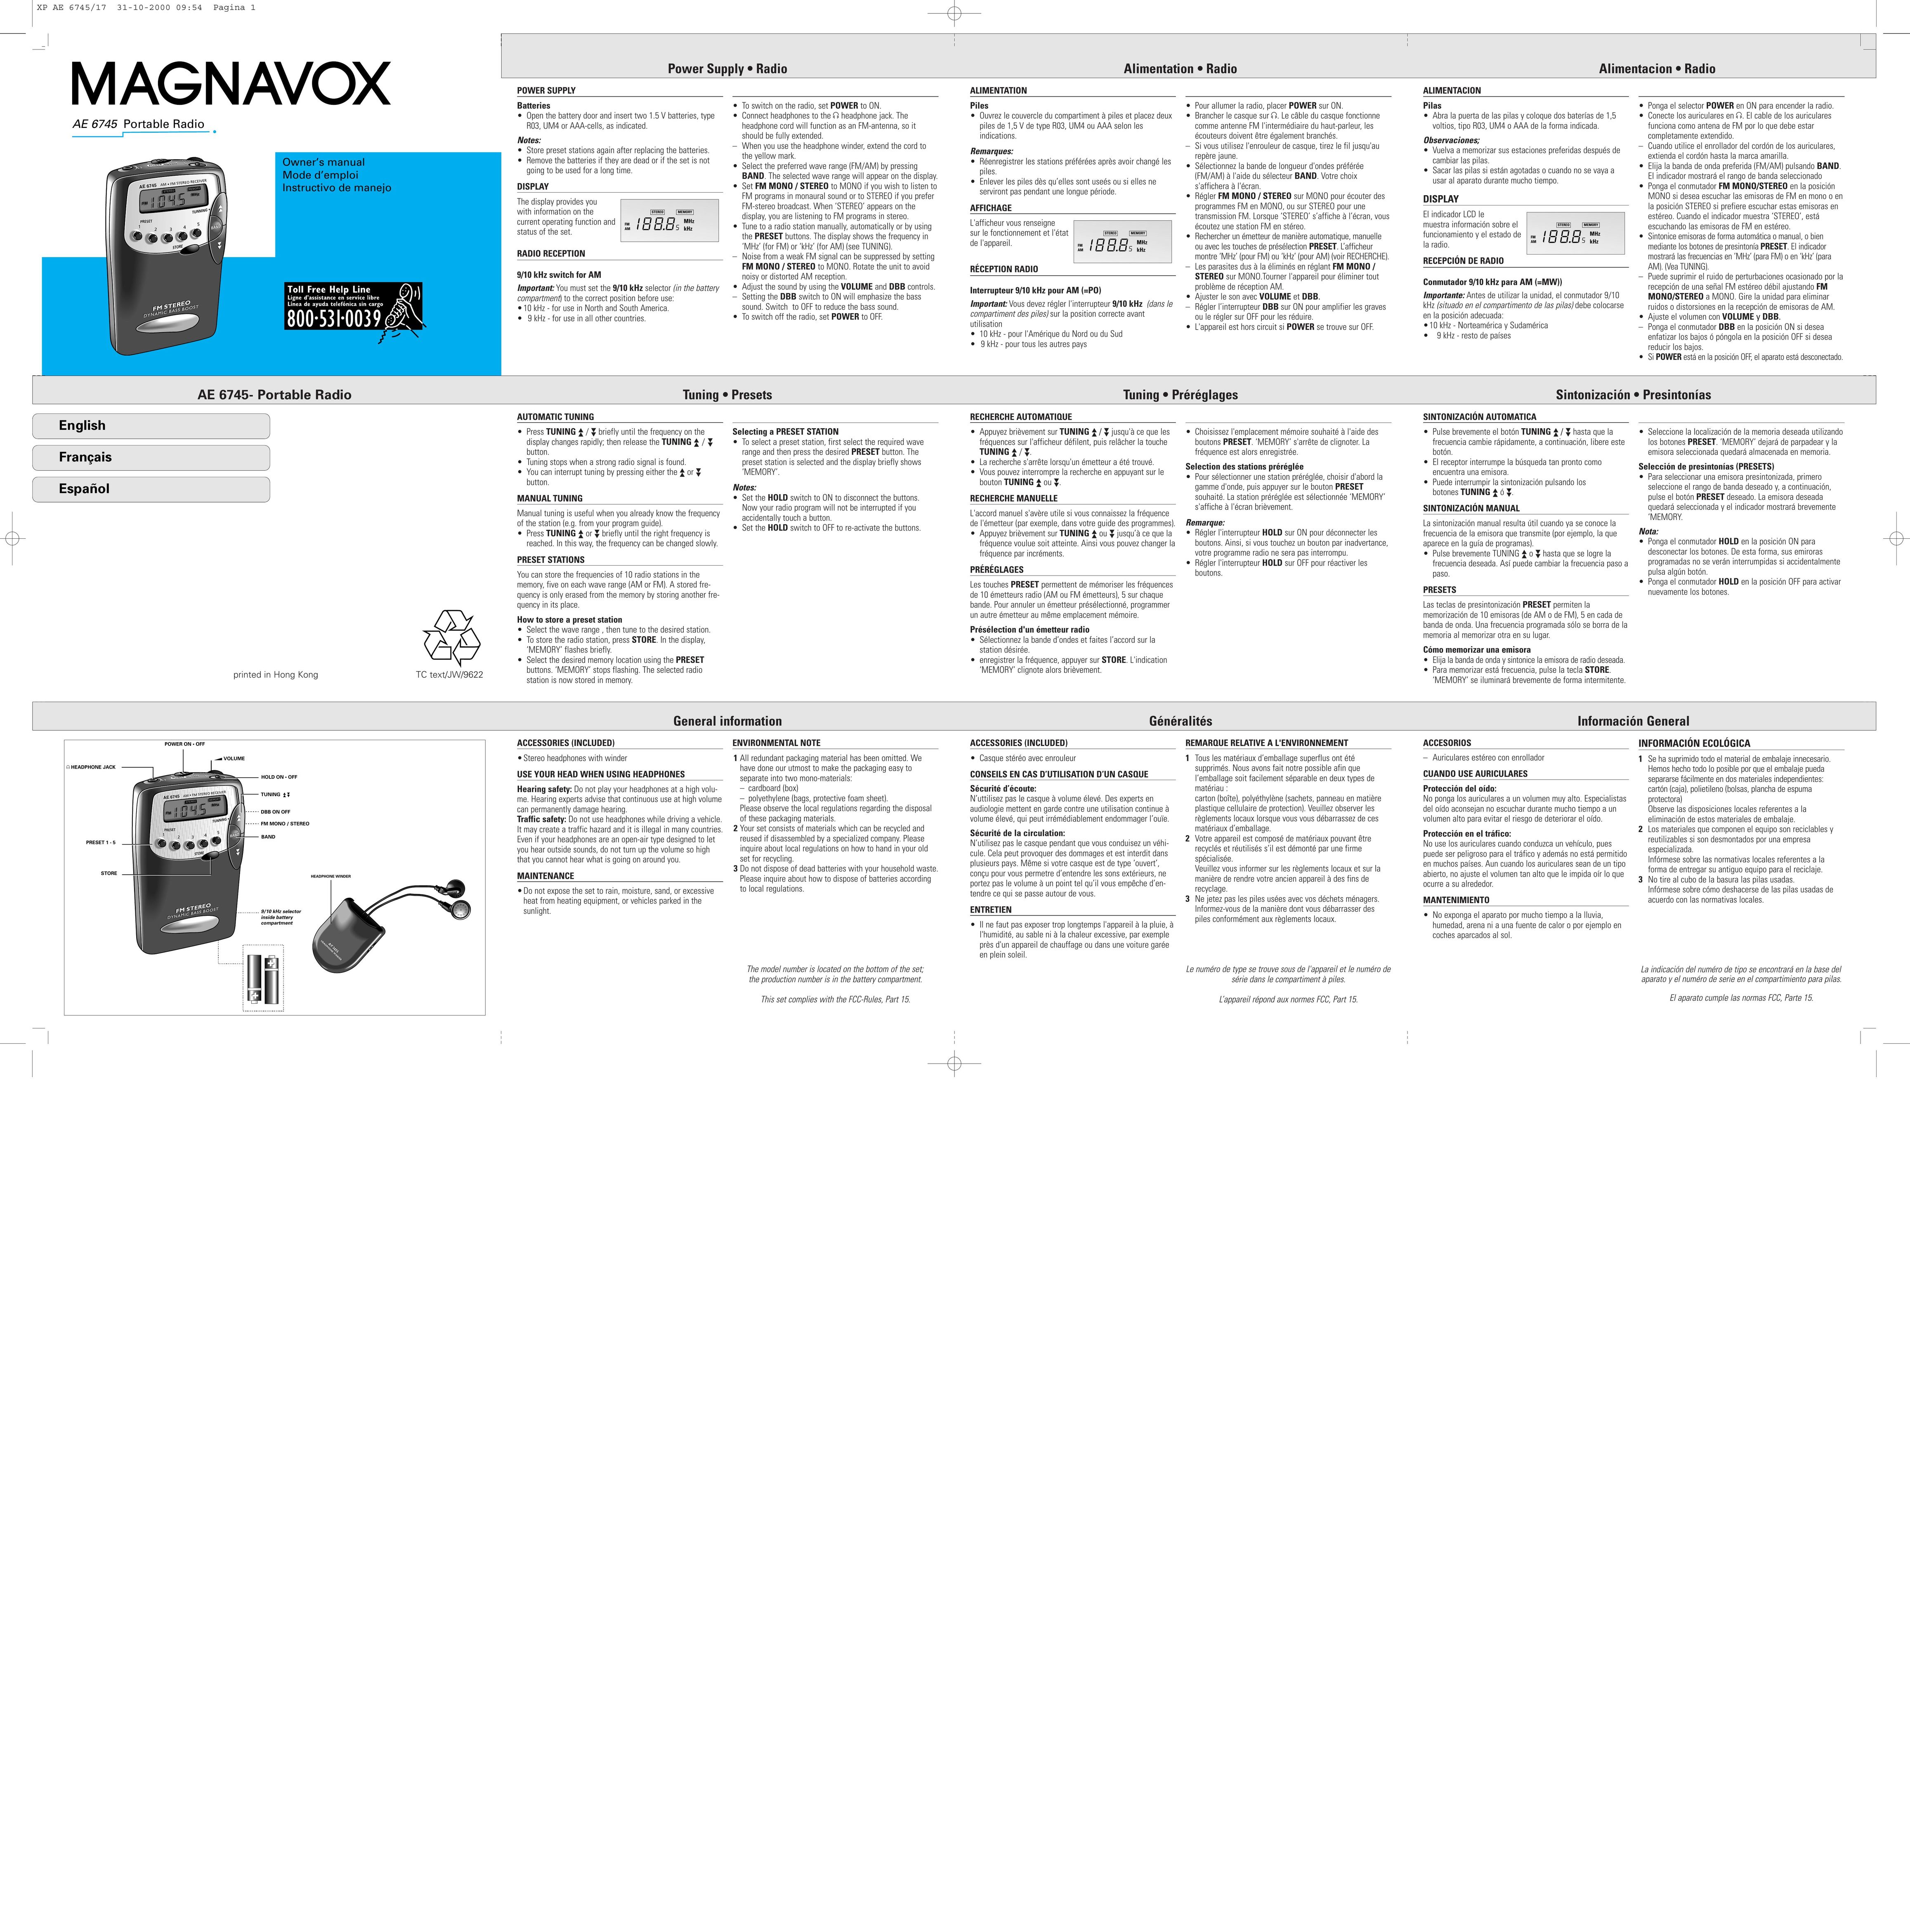 Magnavox AE 6745 Portable Radio User Manual